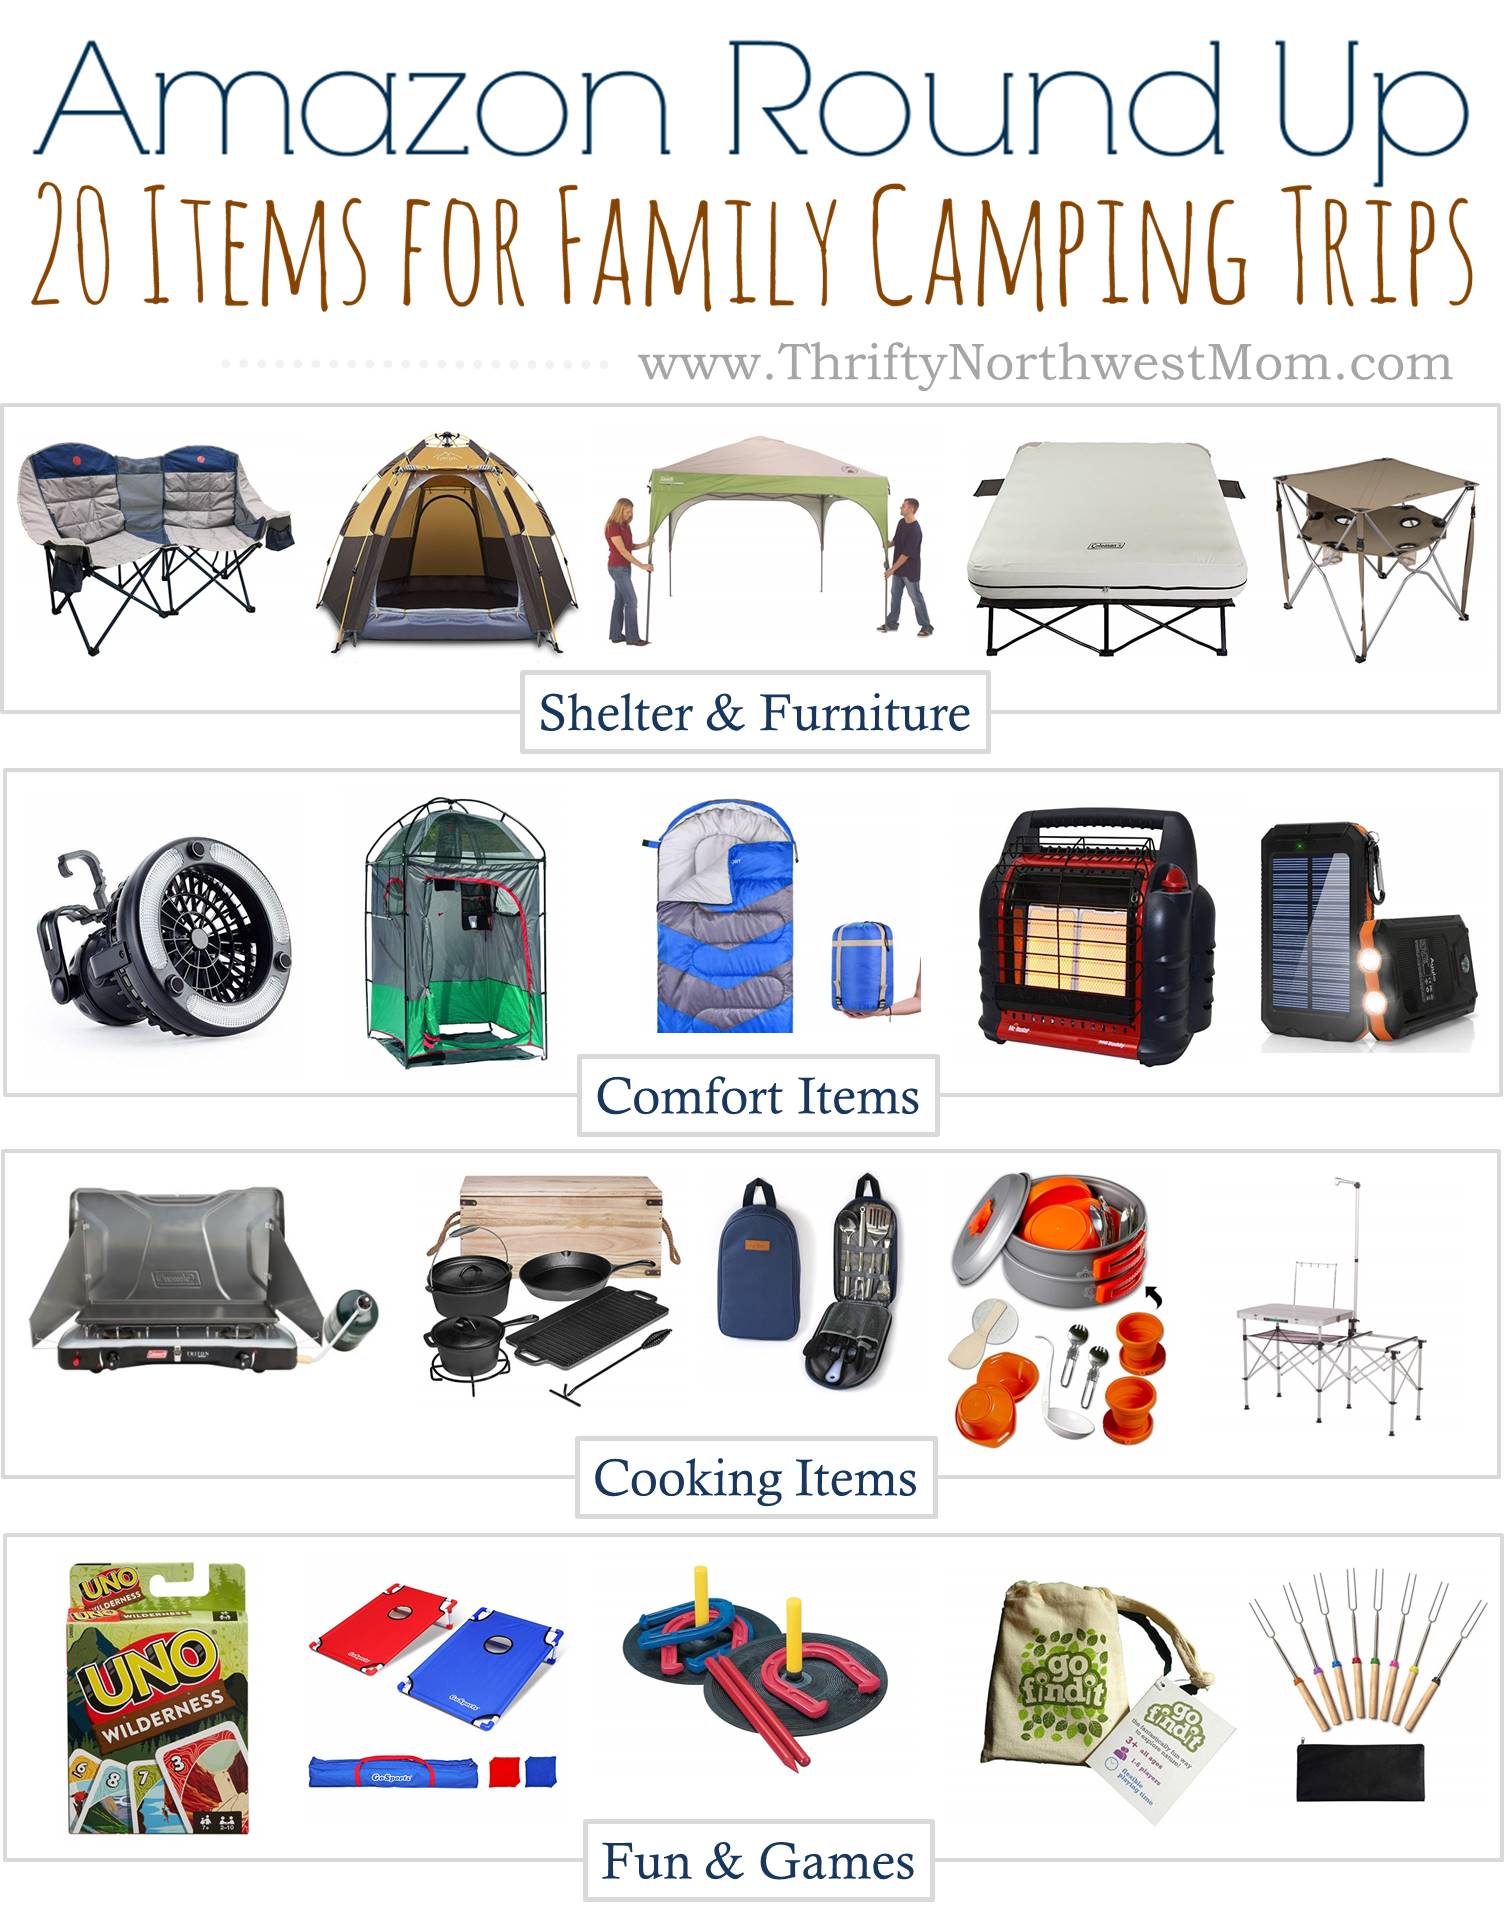 https://www.thriftynorthwestmom.com/wp-content/uploads/2019/03/3.17-Amazon-Round-Up-Camping-Items-NWMOM.jpg